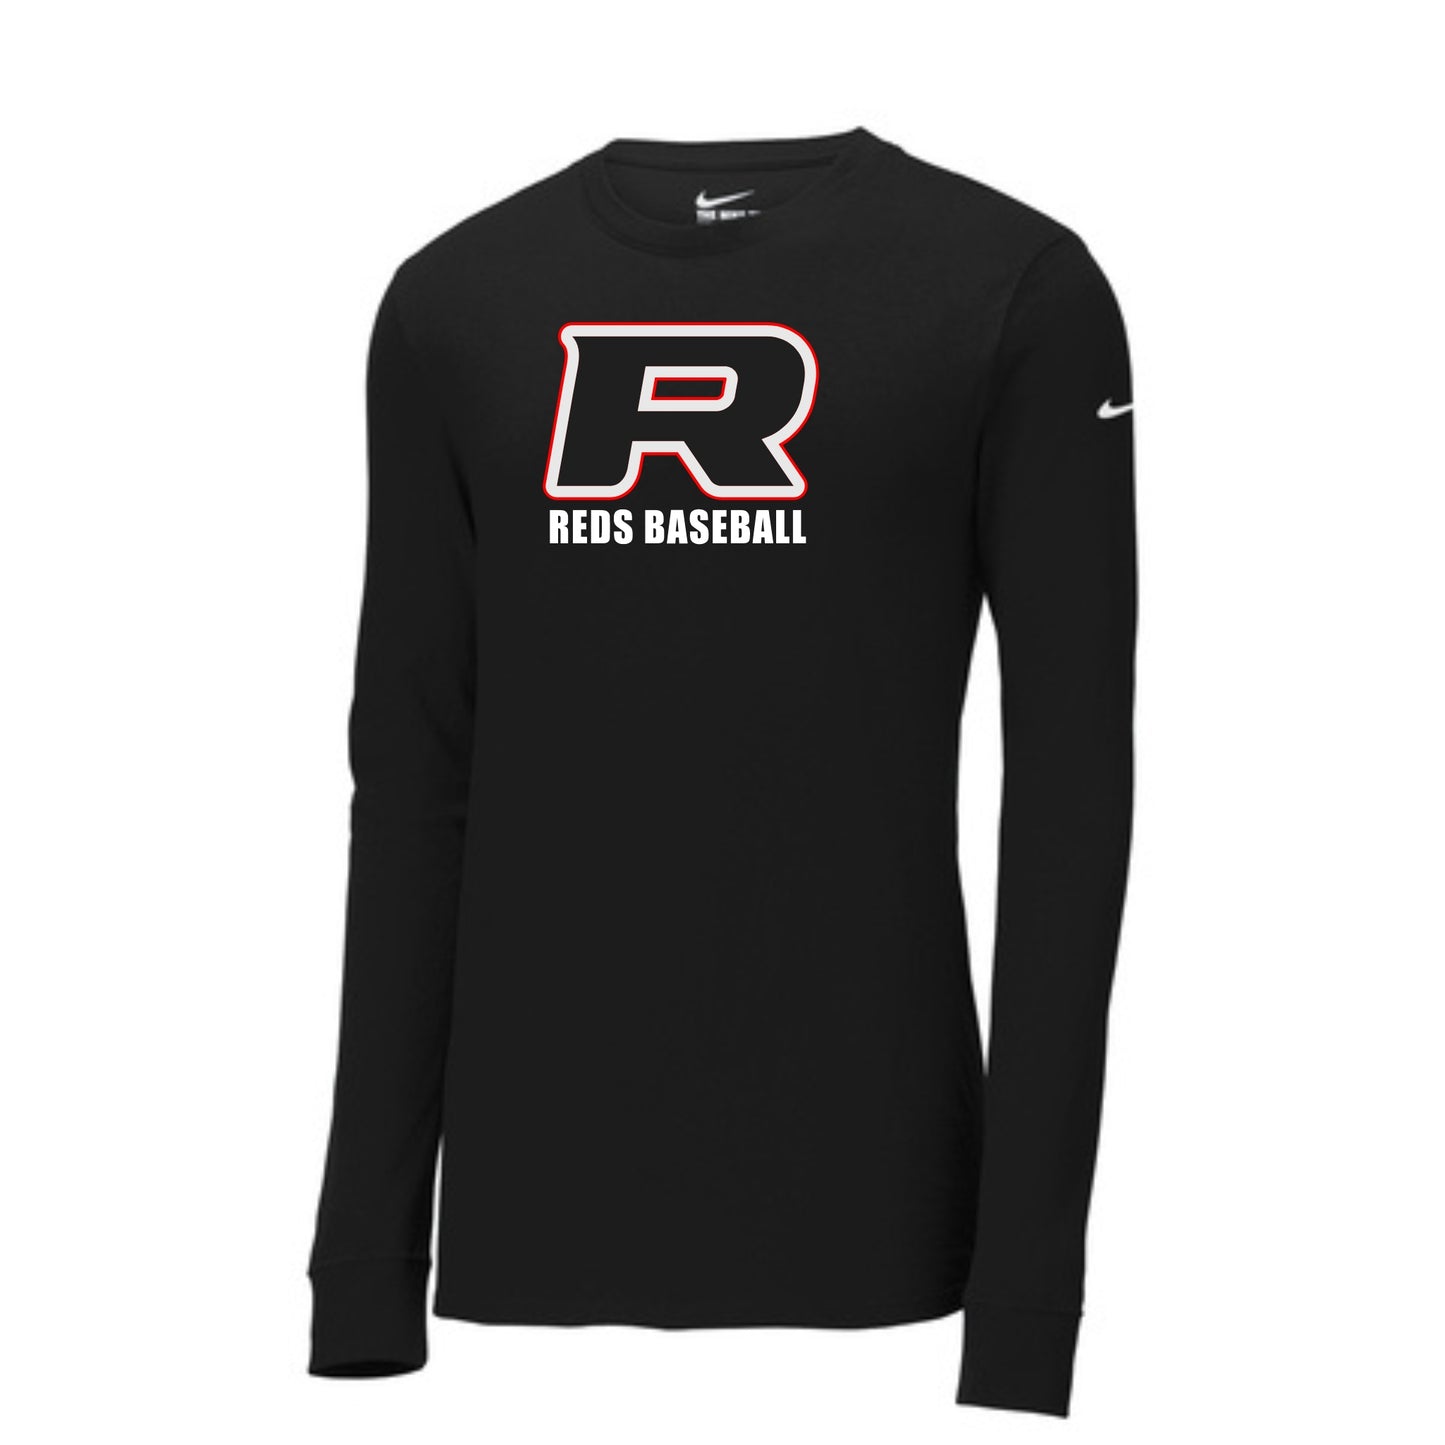 Blackout "R" Nike Cotton/Poly Long Sleeve